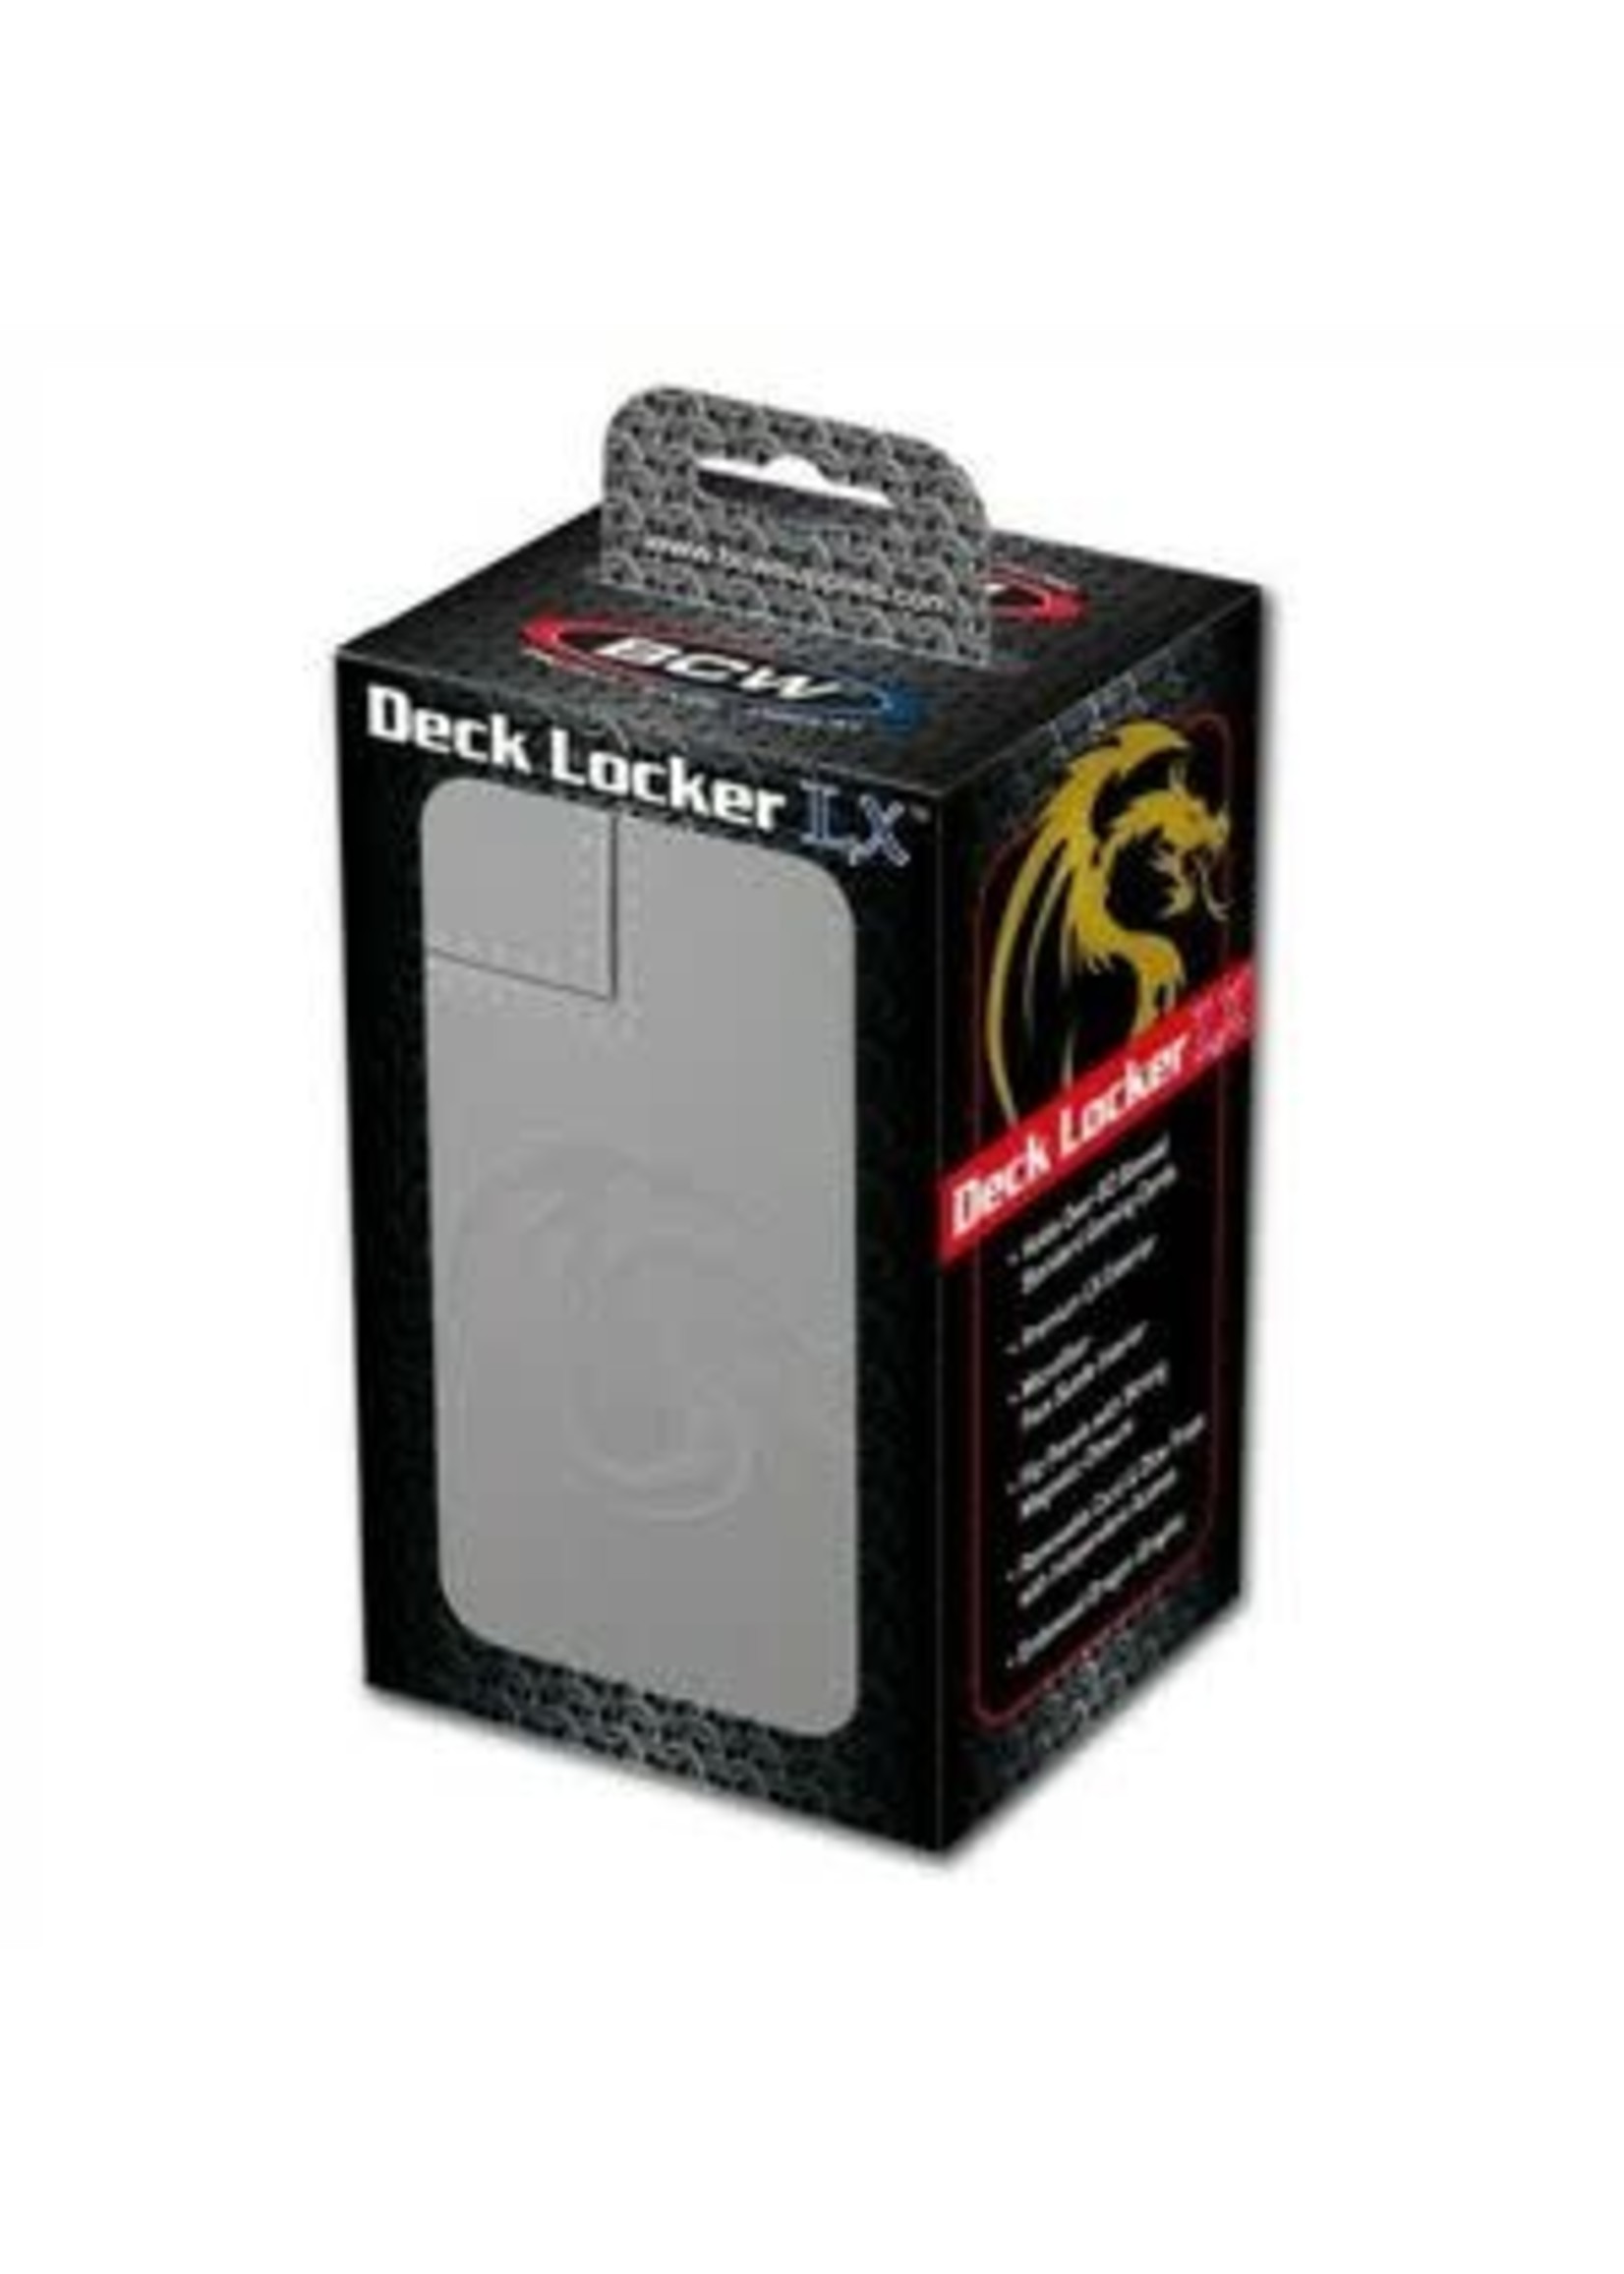 BCW BCW 80 Card Deck Locker LX